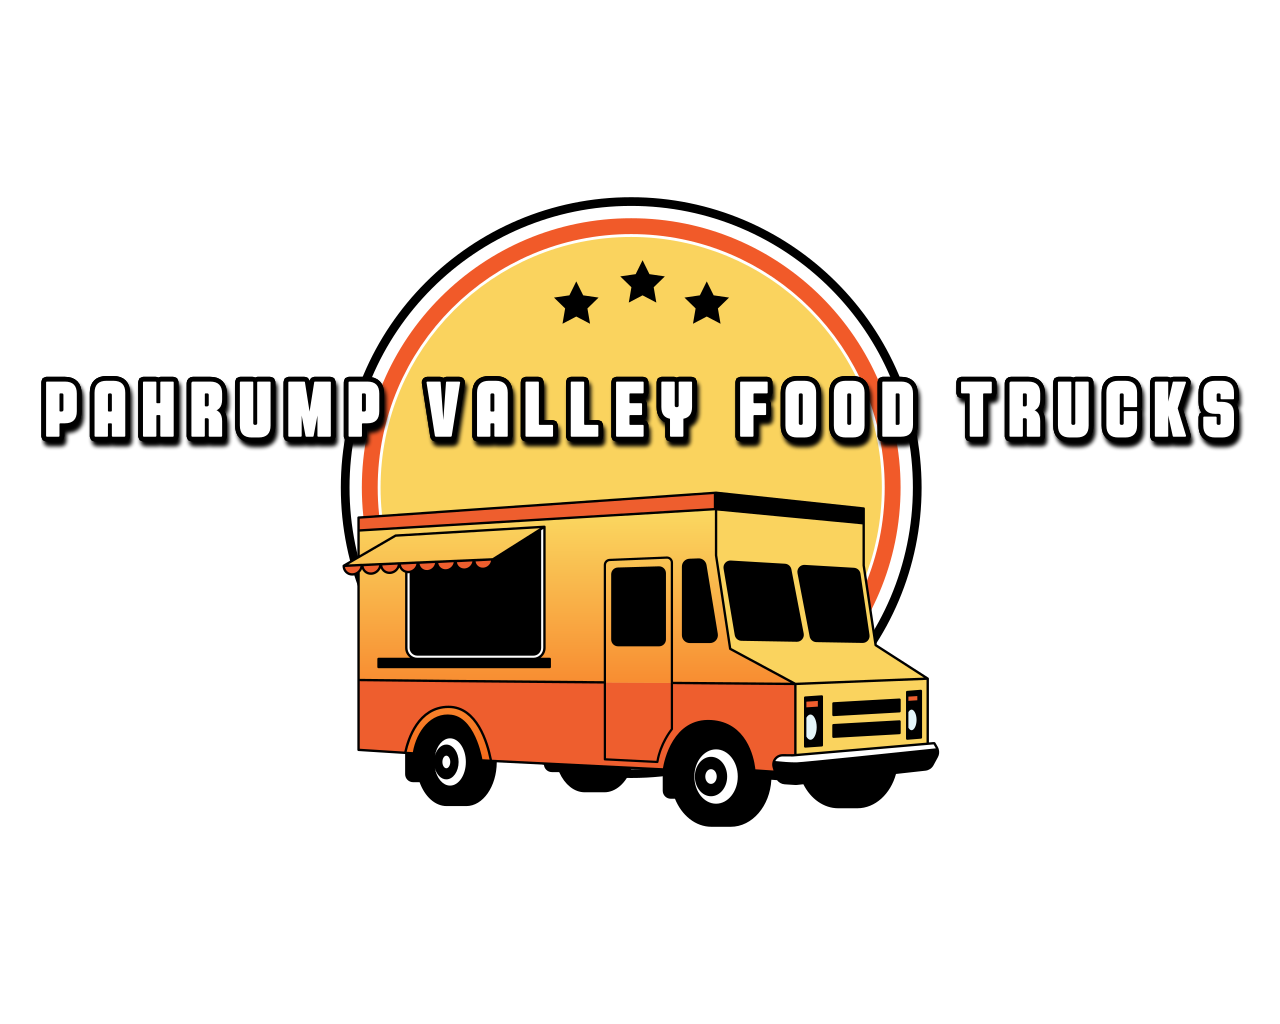 Pahrump Valley Food Trucks